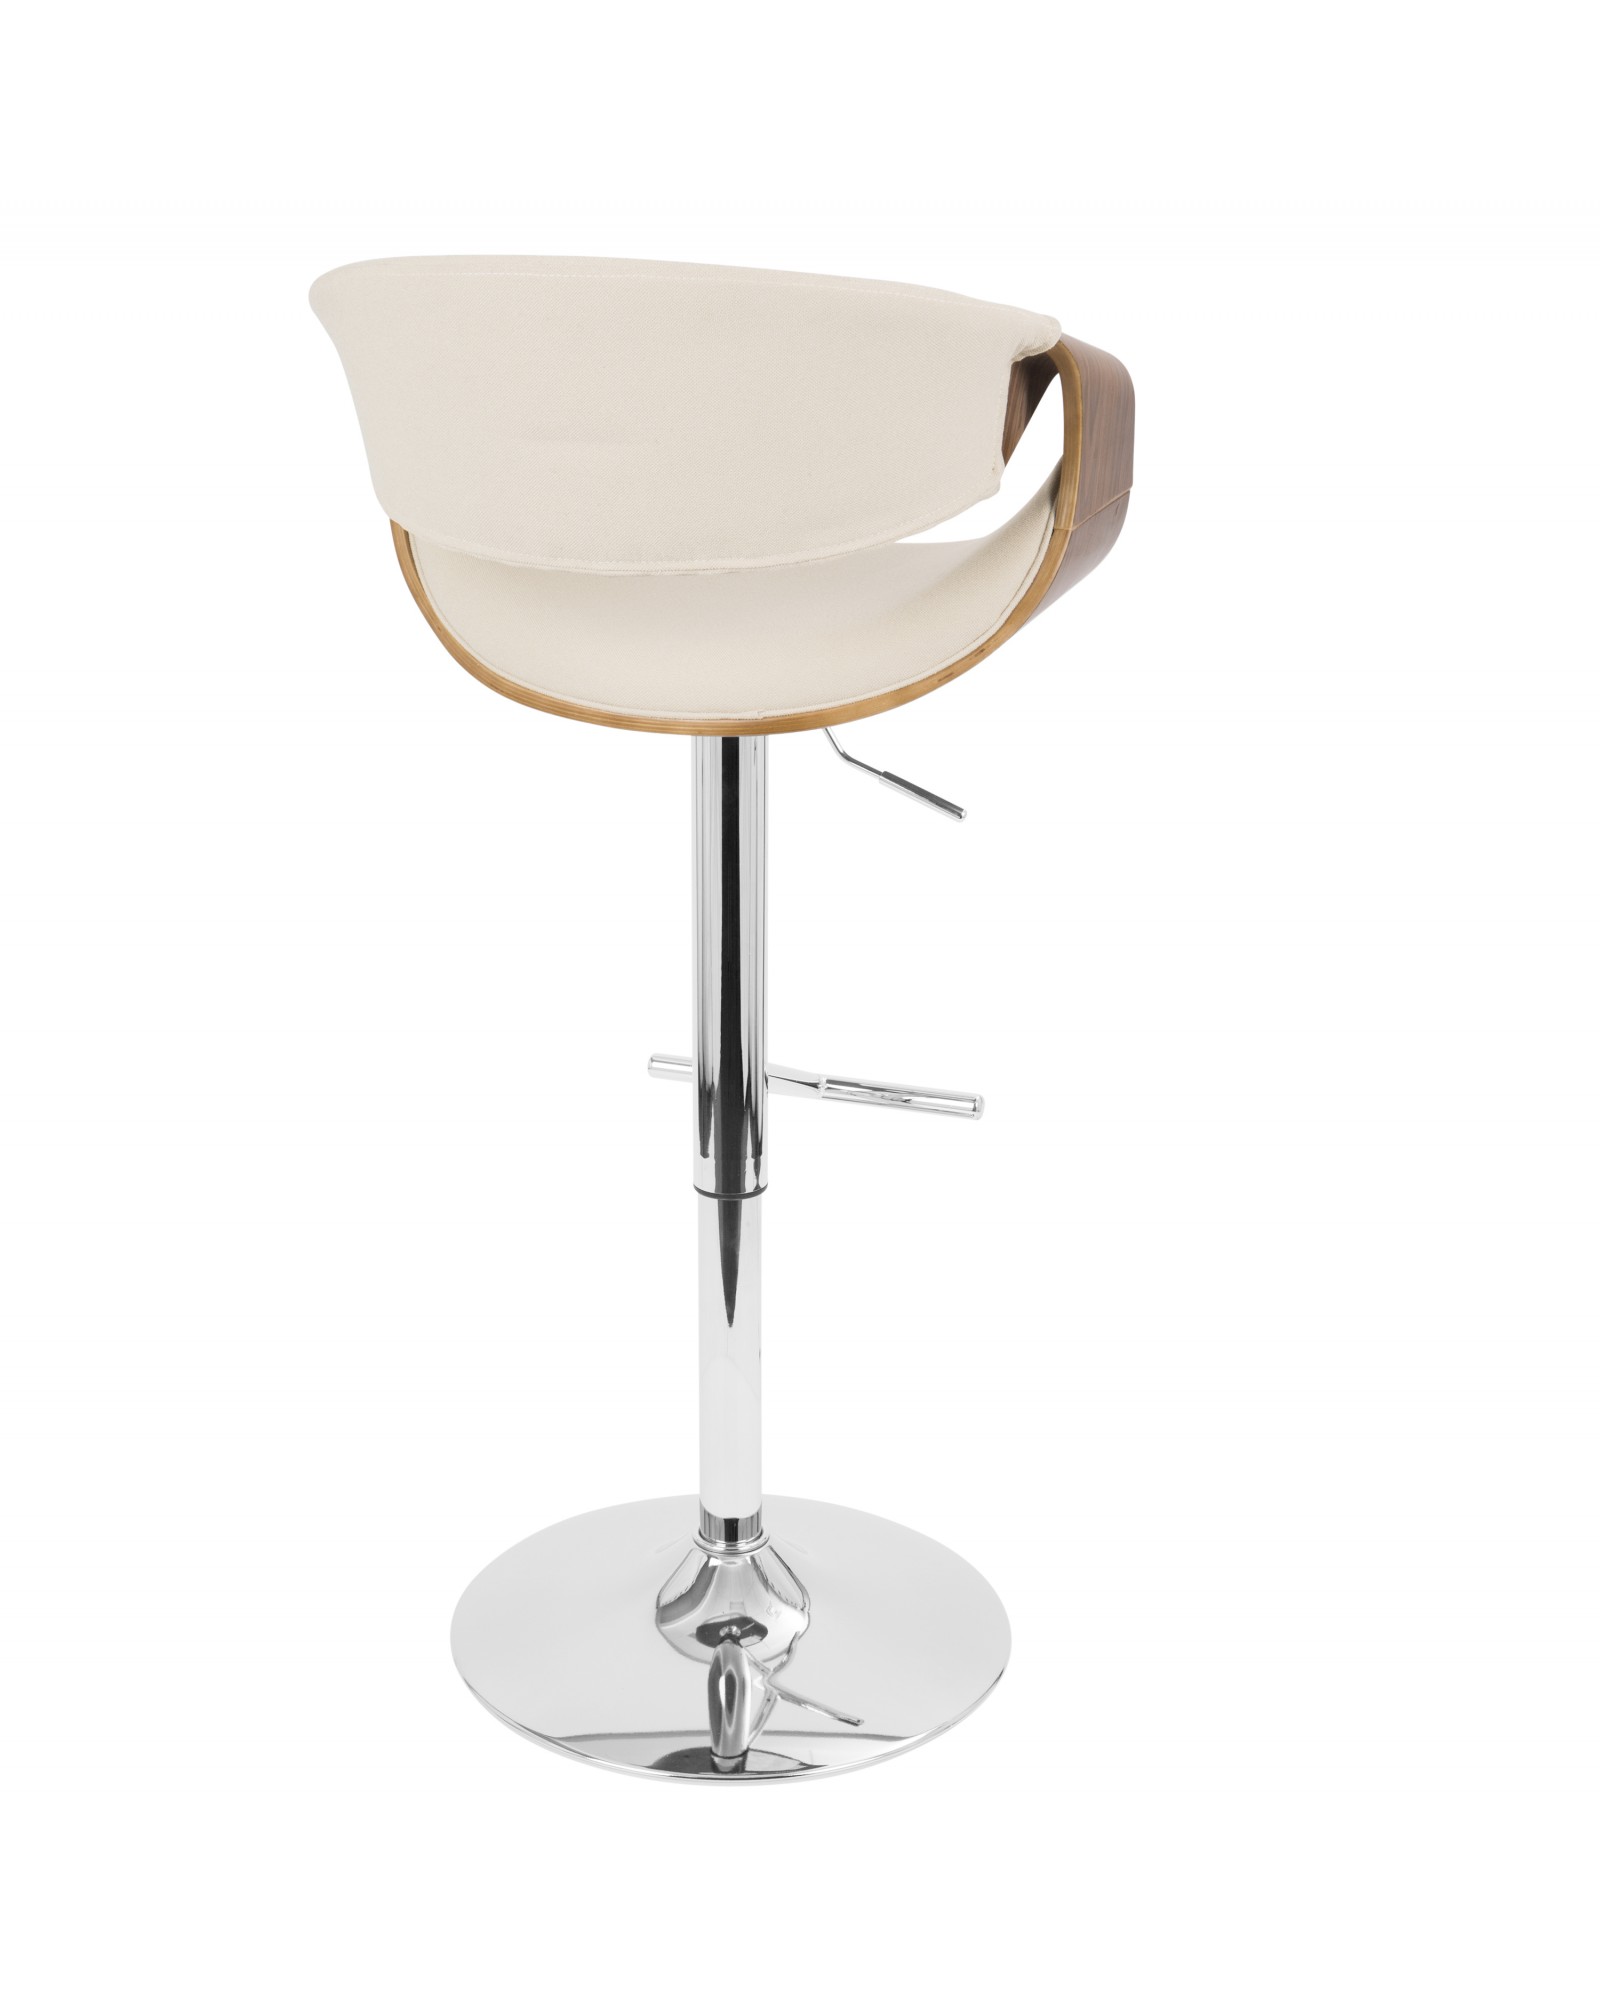 Curvo Mid-Century Modern Adjustable Barstool with Swivel in Walnut and Cream